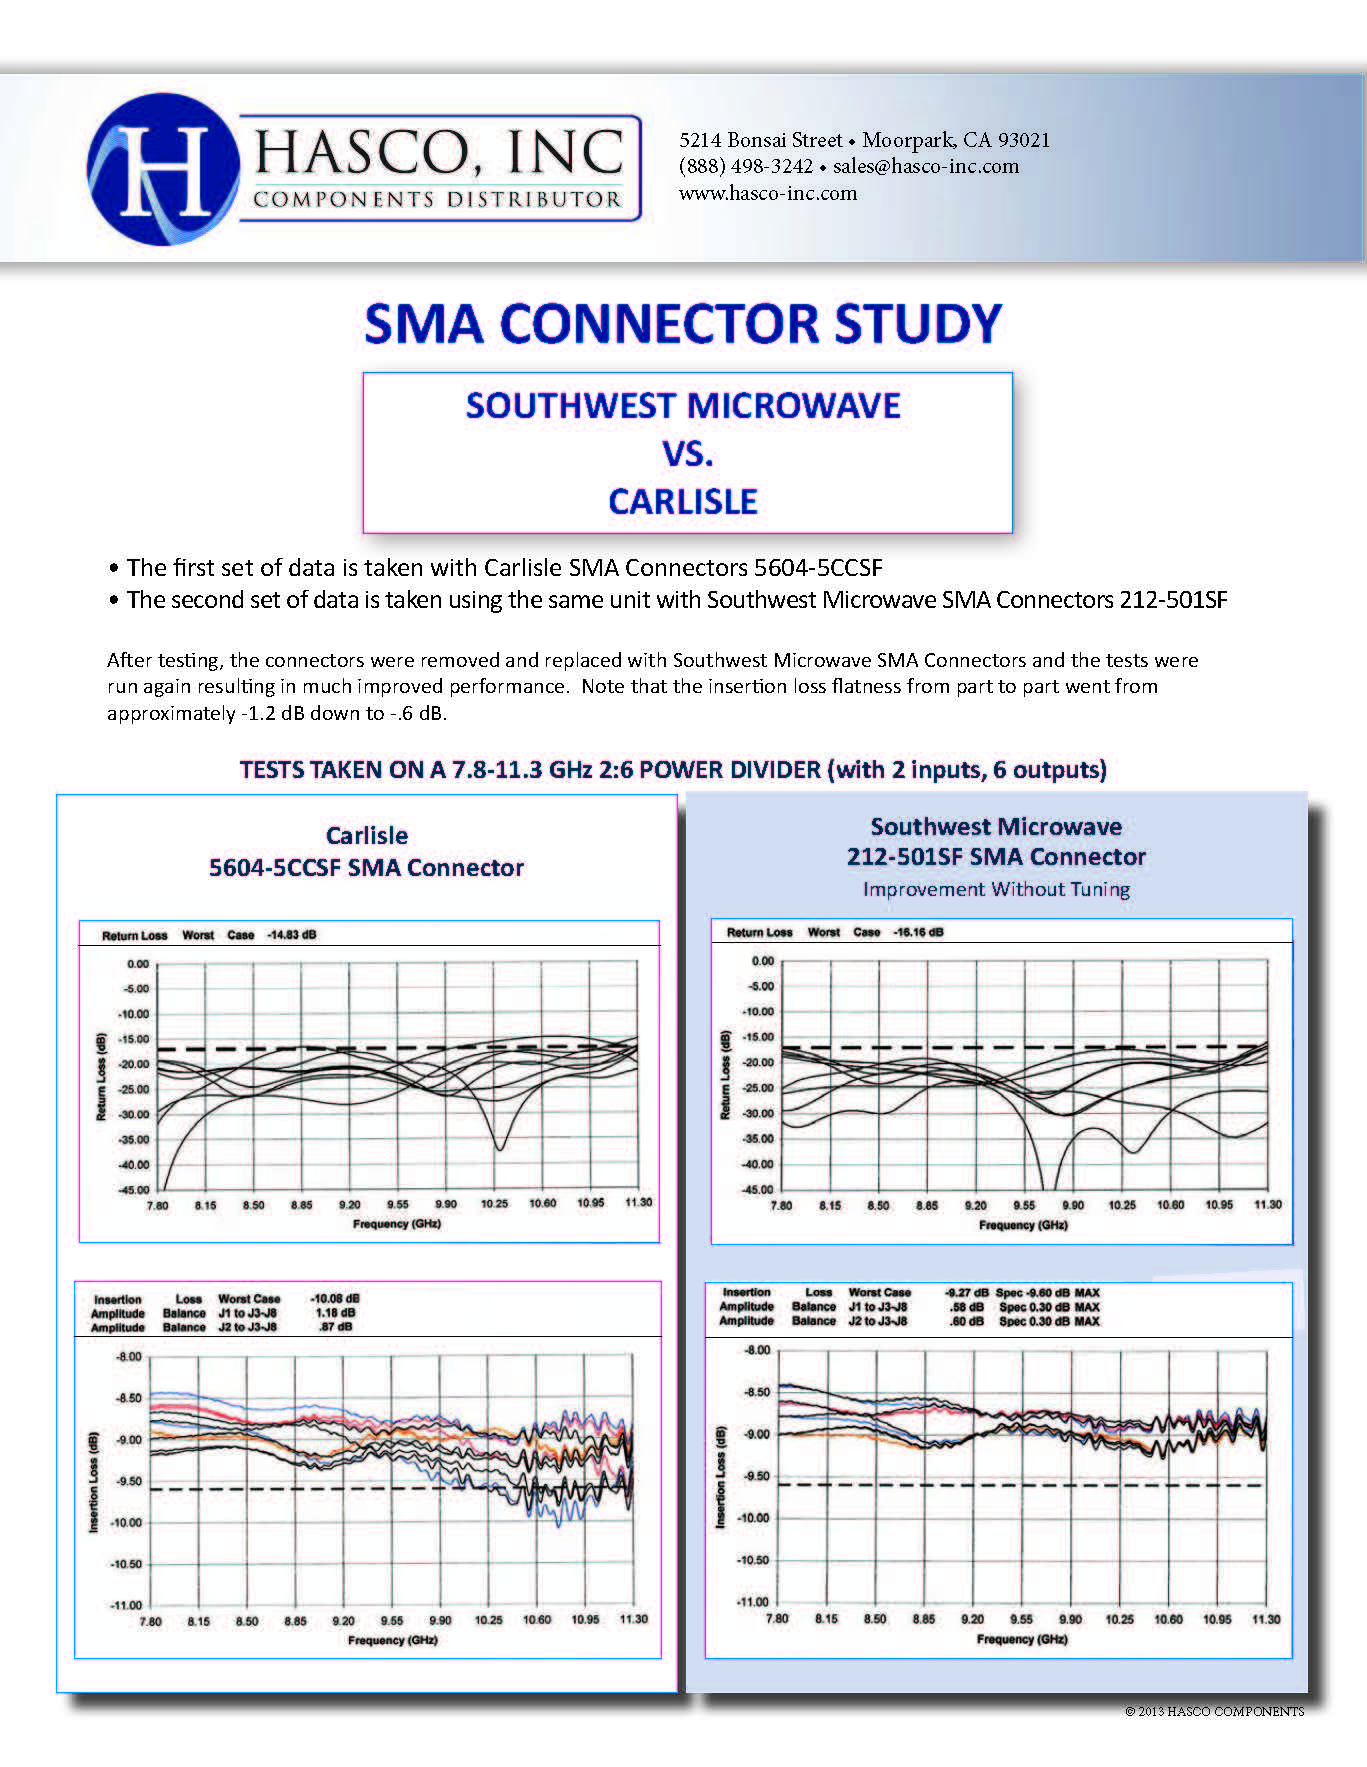 sma-connector-study.jpg